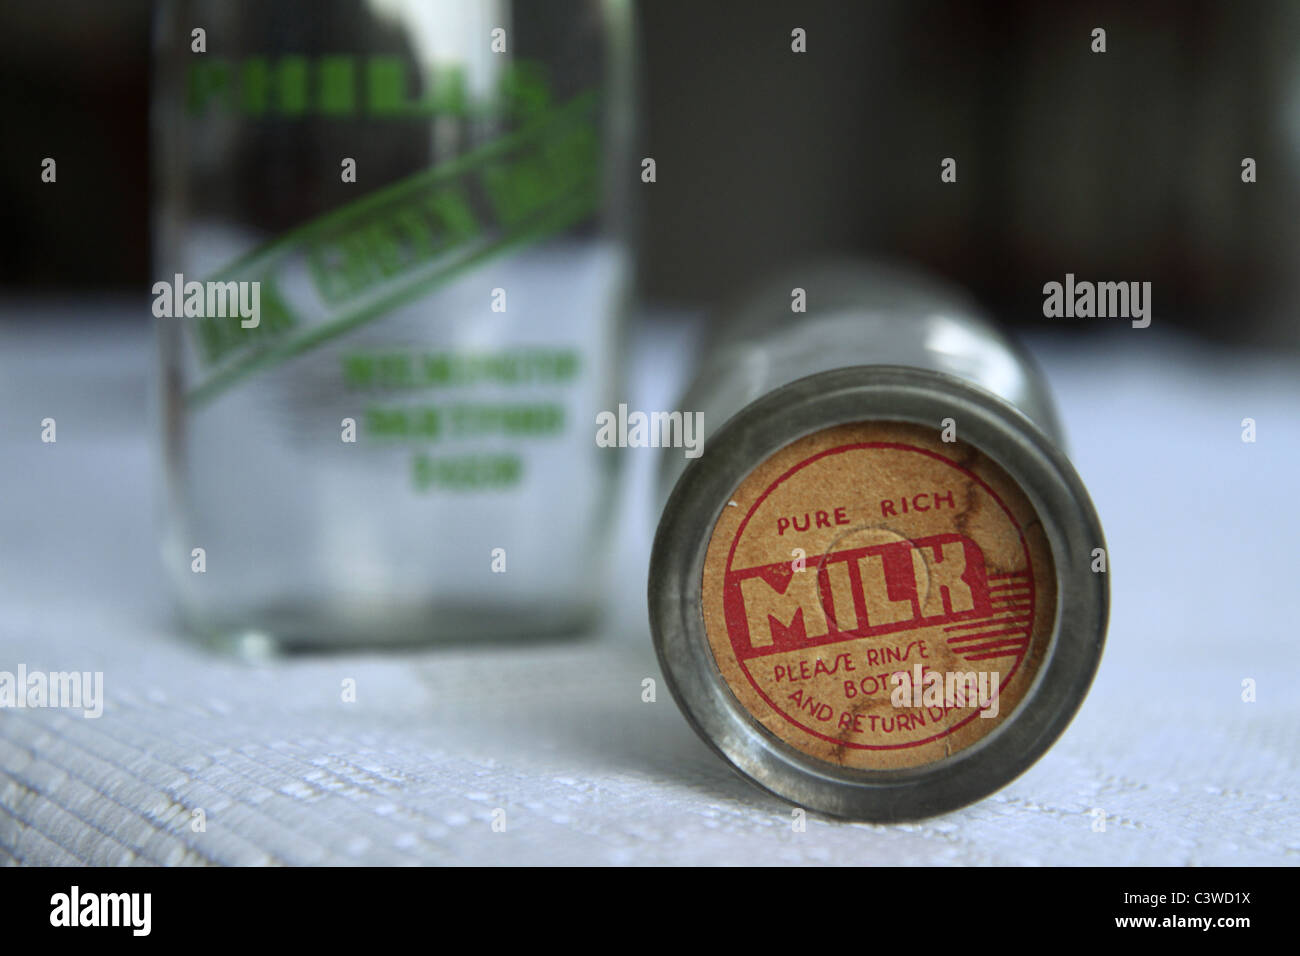 https://c8.alamy.com/comp/C3WD1X/old-fashioned-milk-bottle-circa-1930s-with-cardboard-cap-C3WD1X.jpg